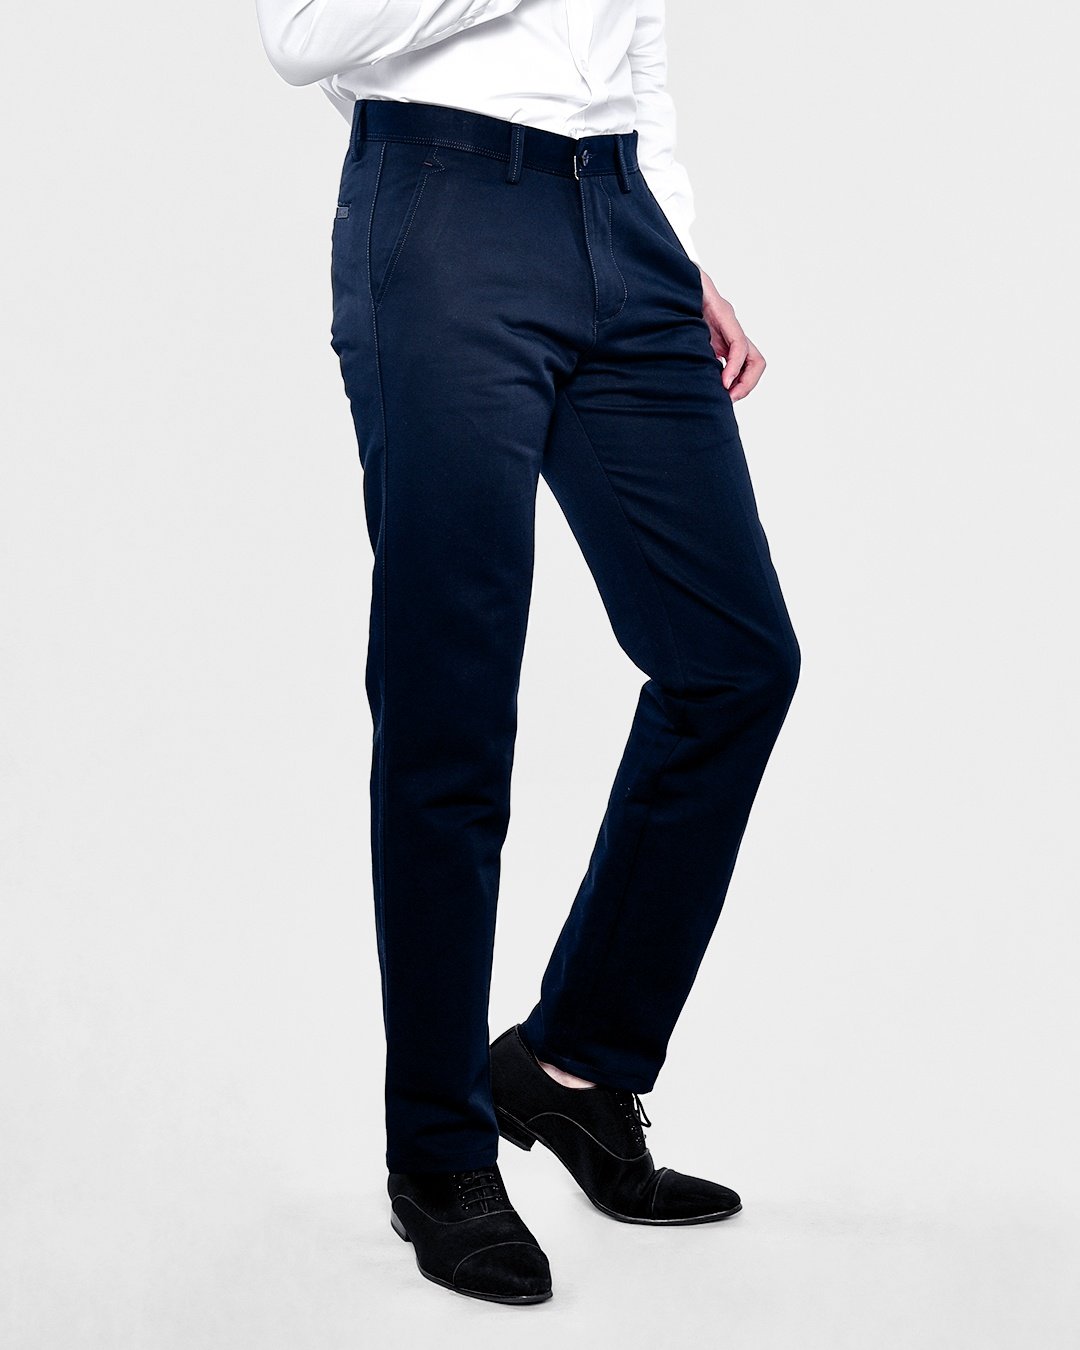 Modern Tapered Fit Khaki Pants (Flex Stretch) - Navy Blue - Men's ...